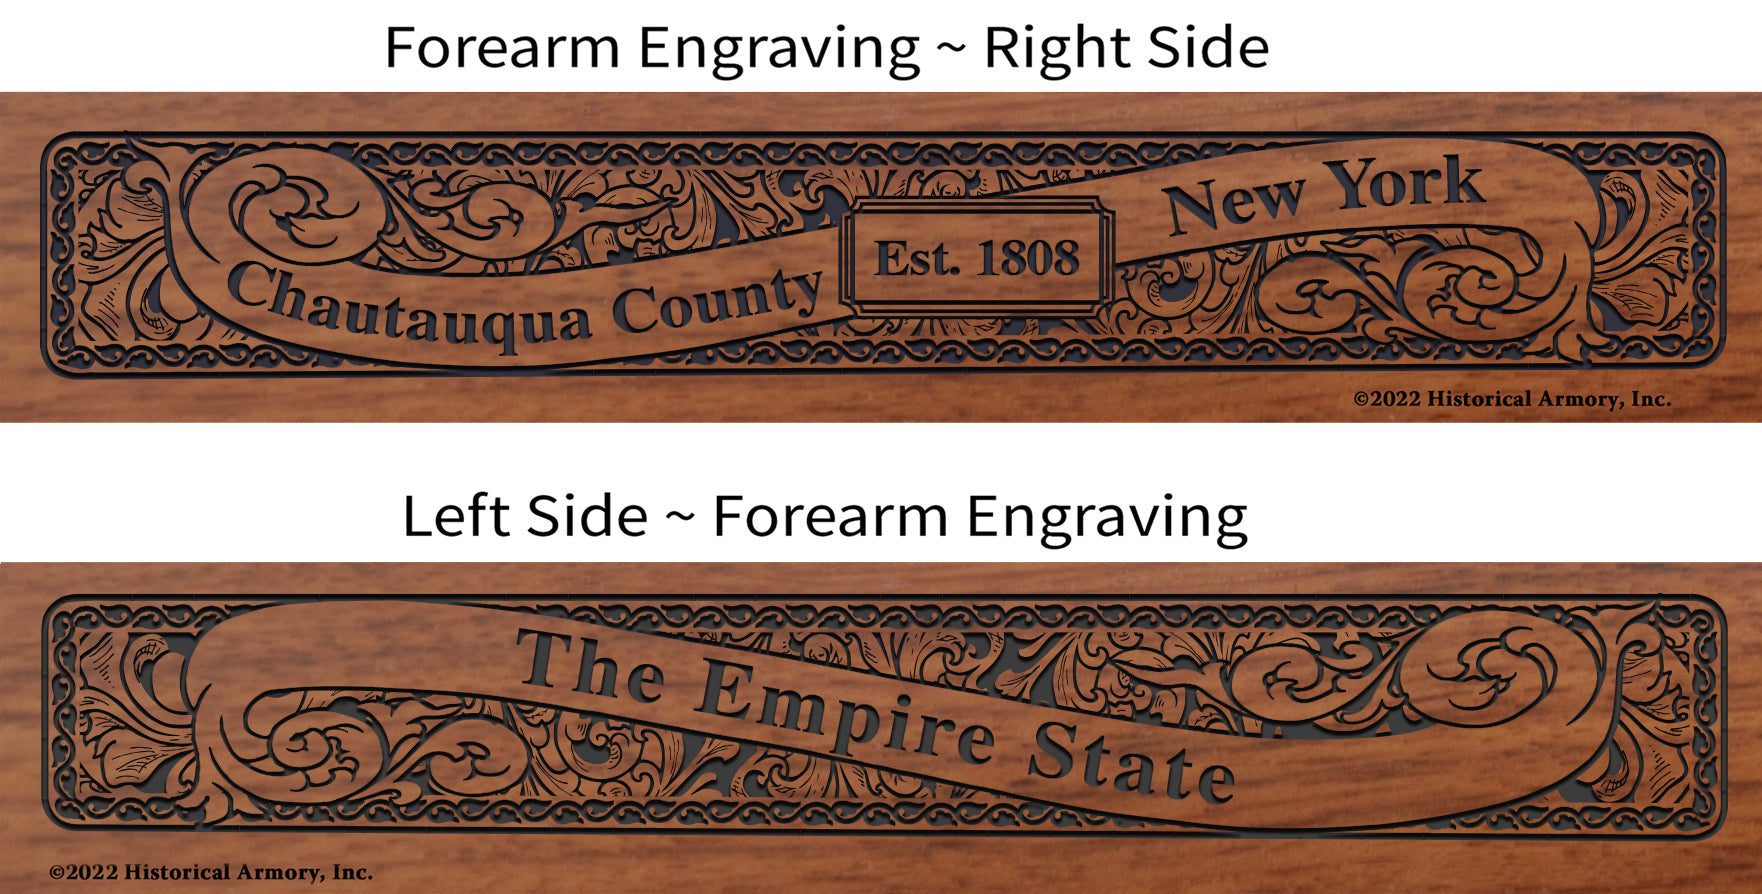 Chautauqua County New York Engraved Rifle Forearm